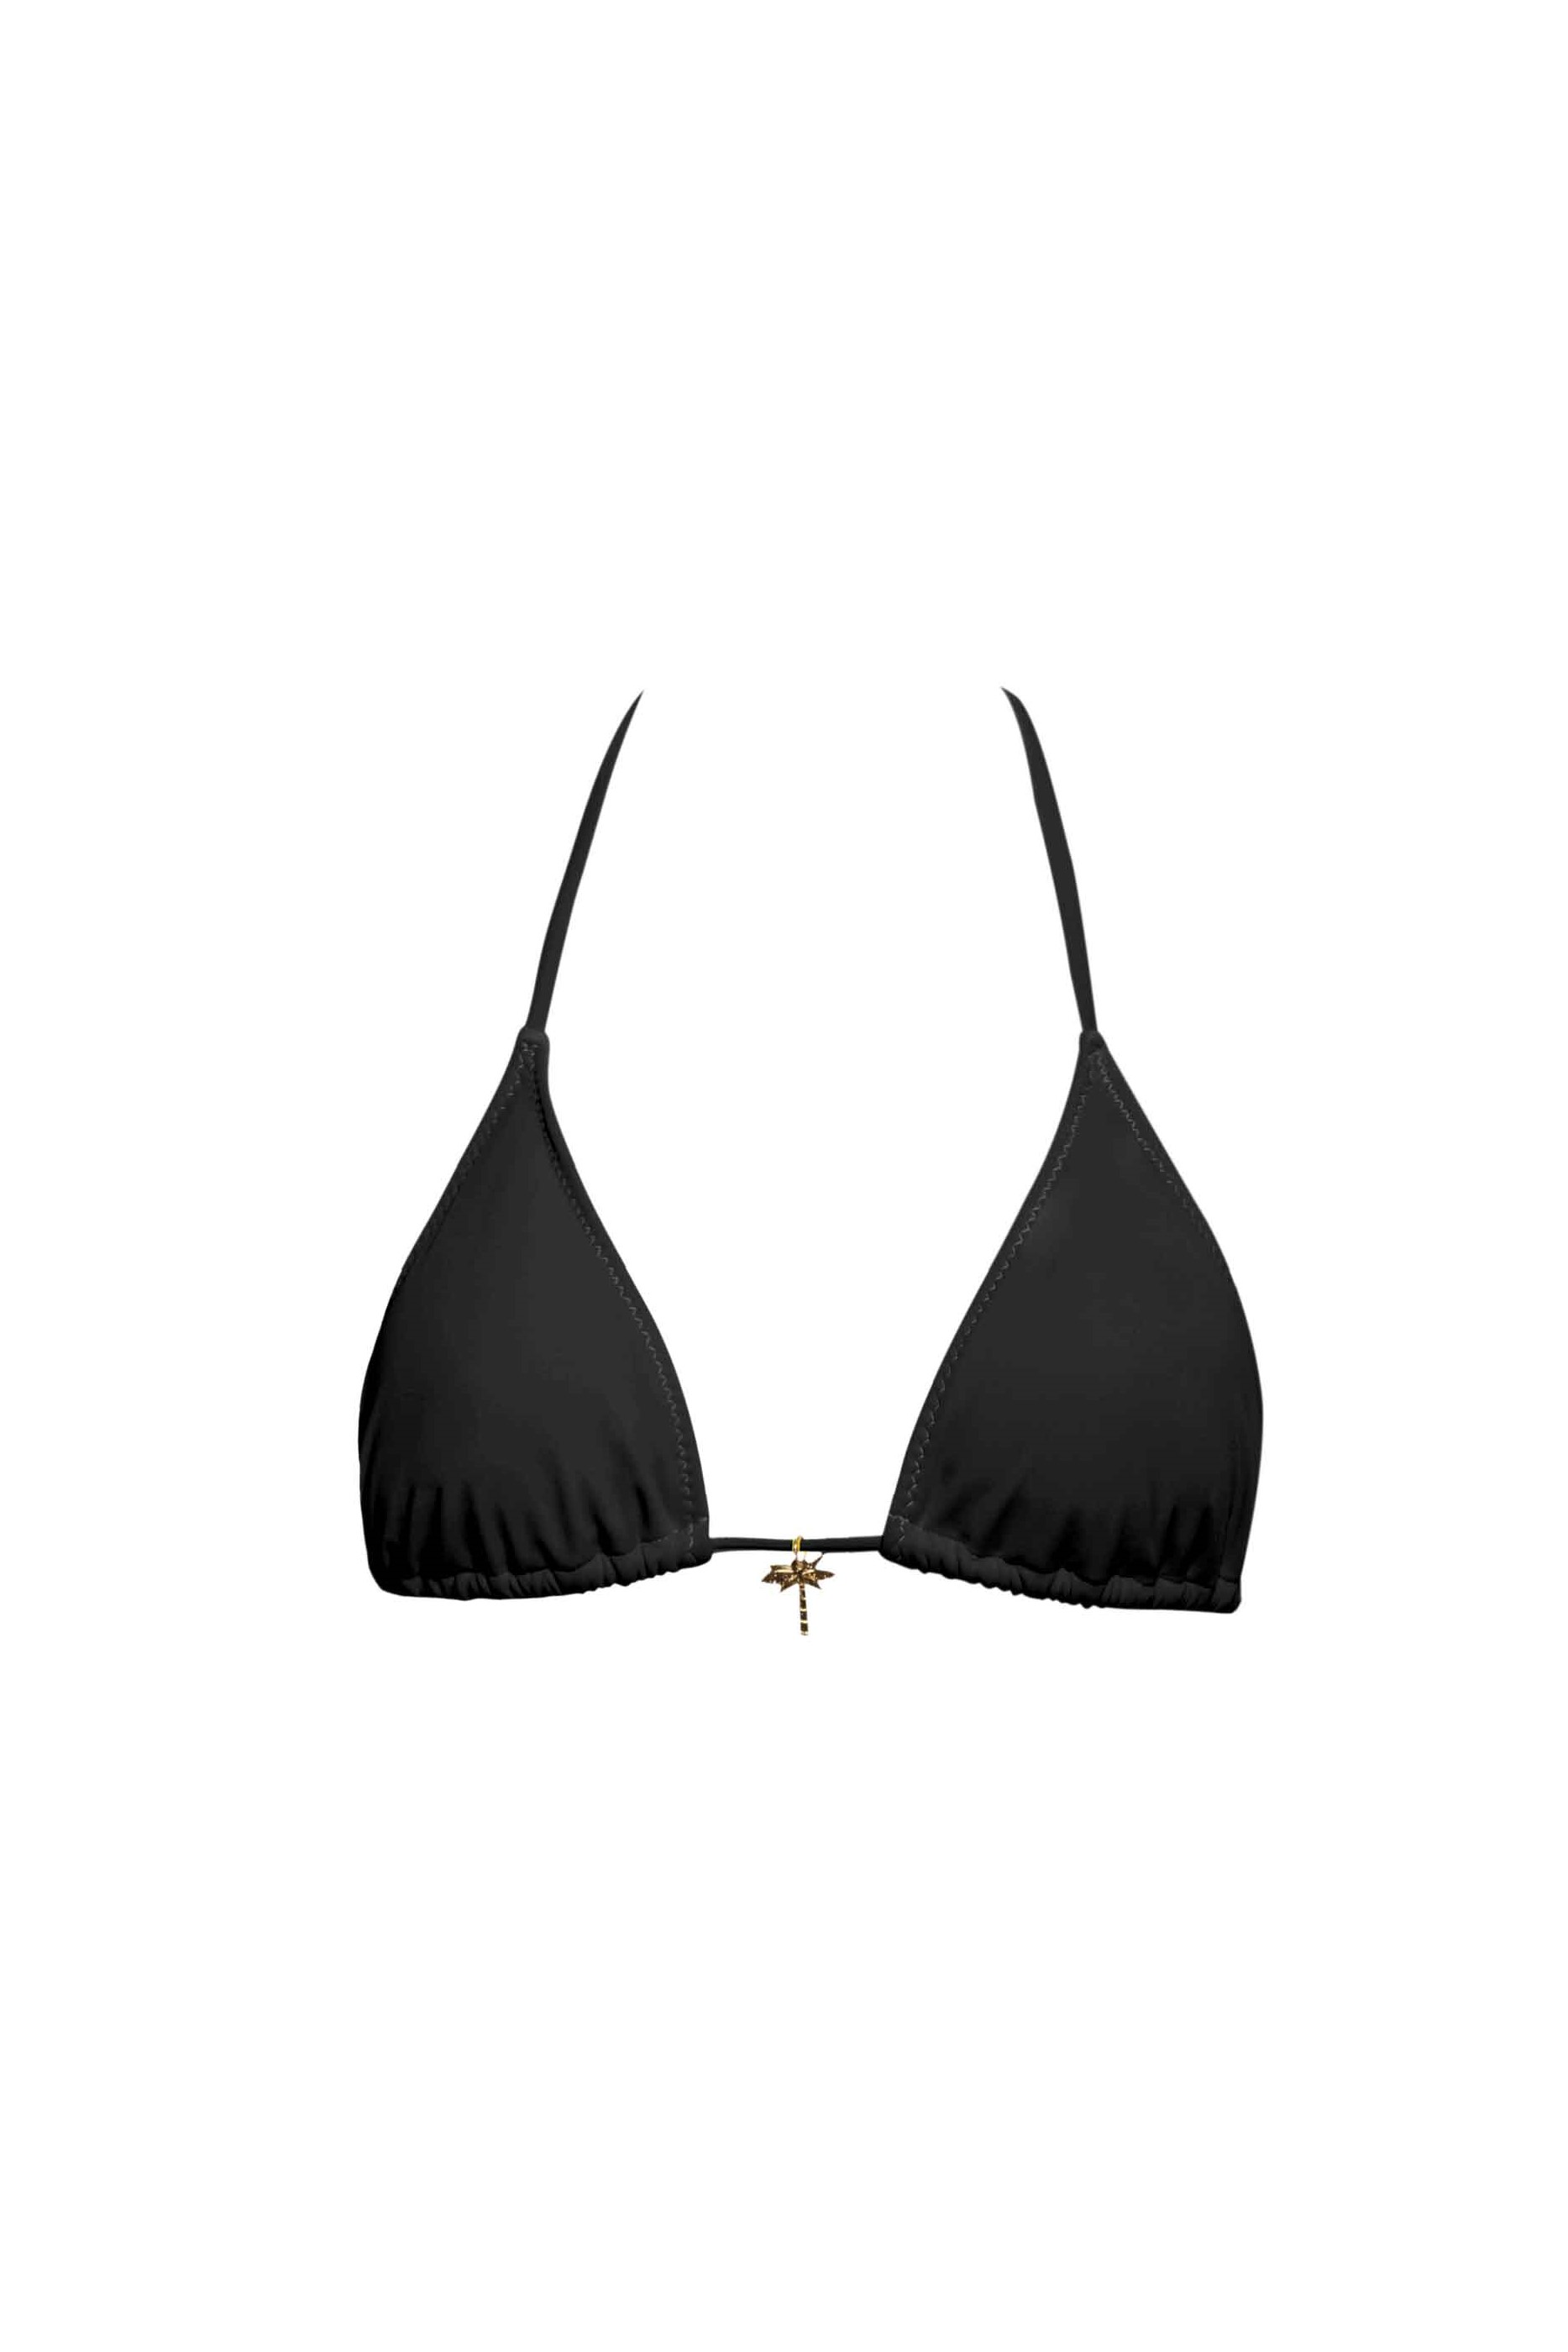 Phax Black Triangle Bikini Top 